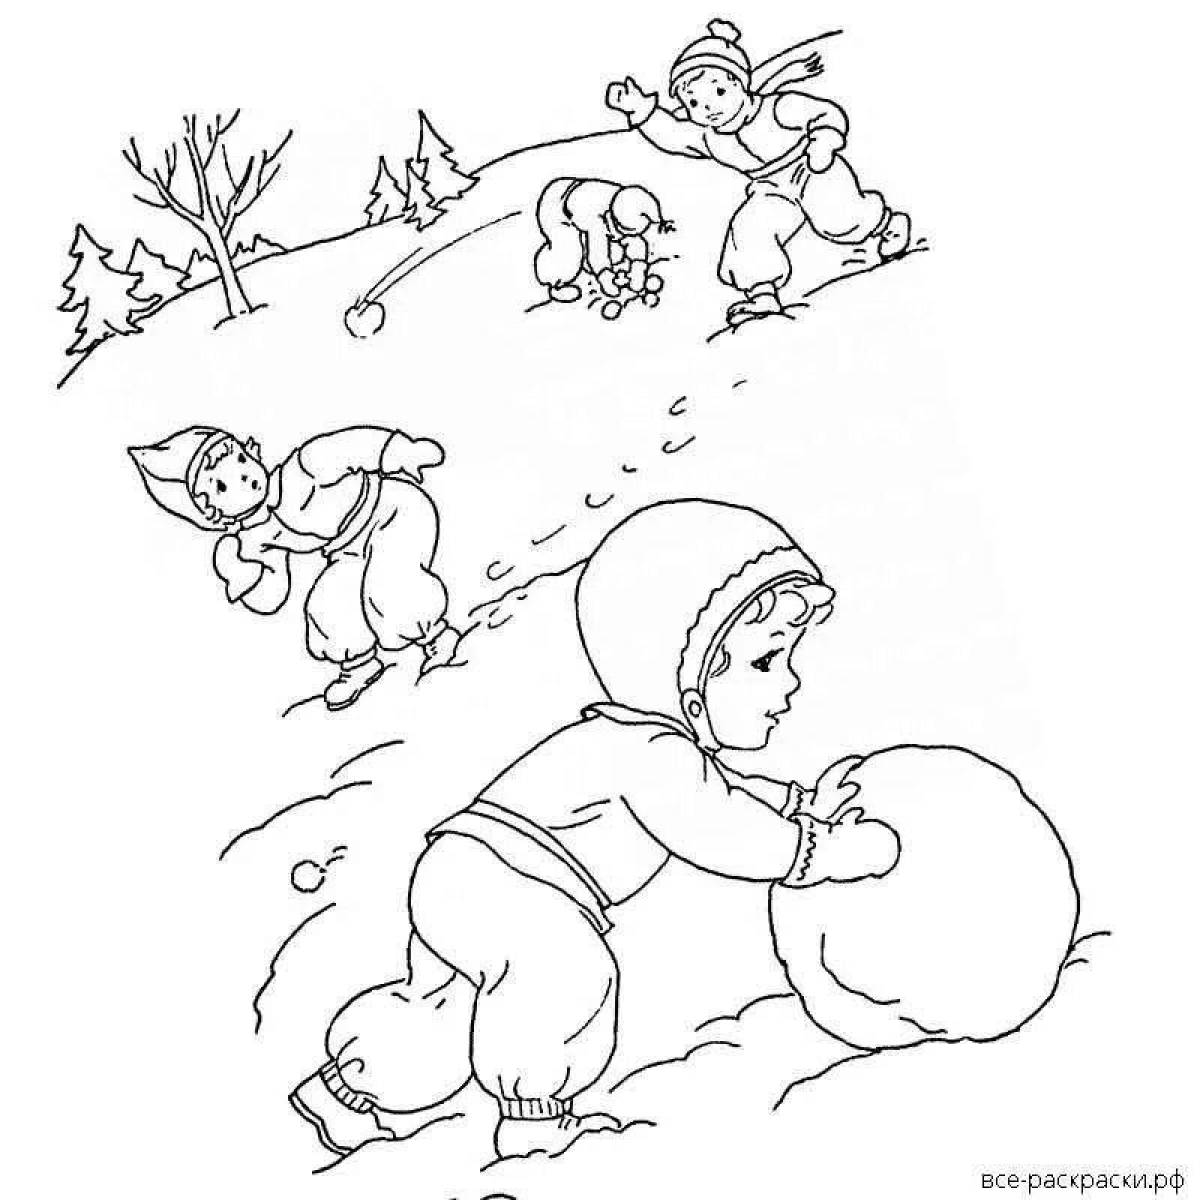 Serene coloring drawing of winter fun